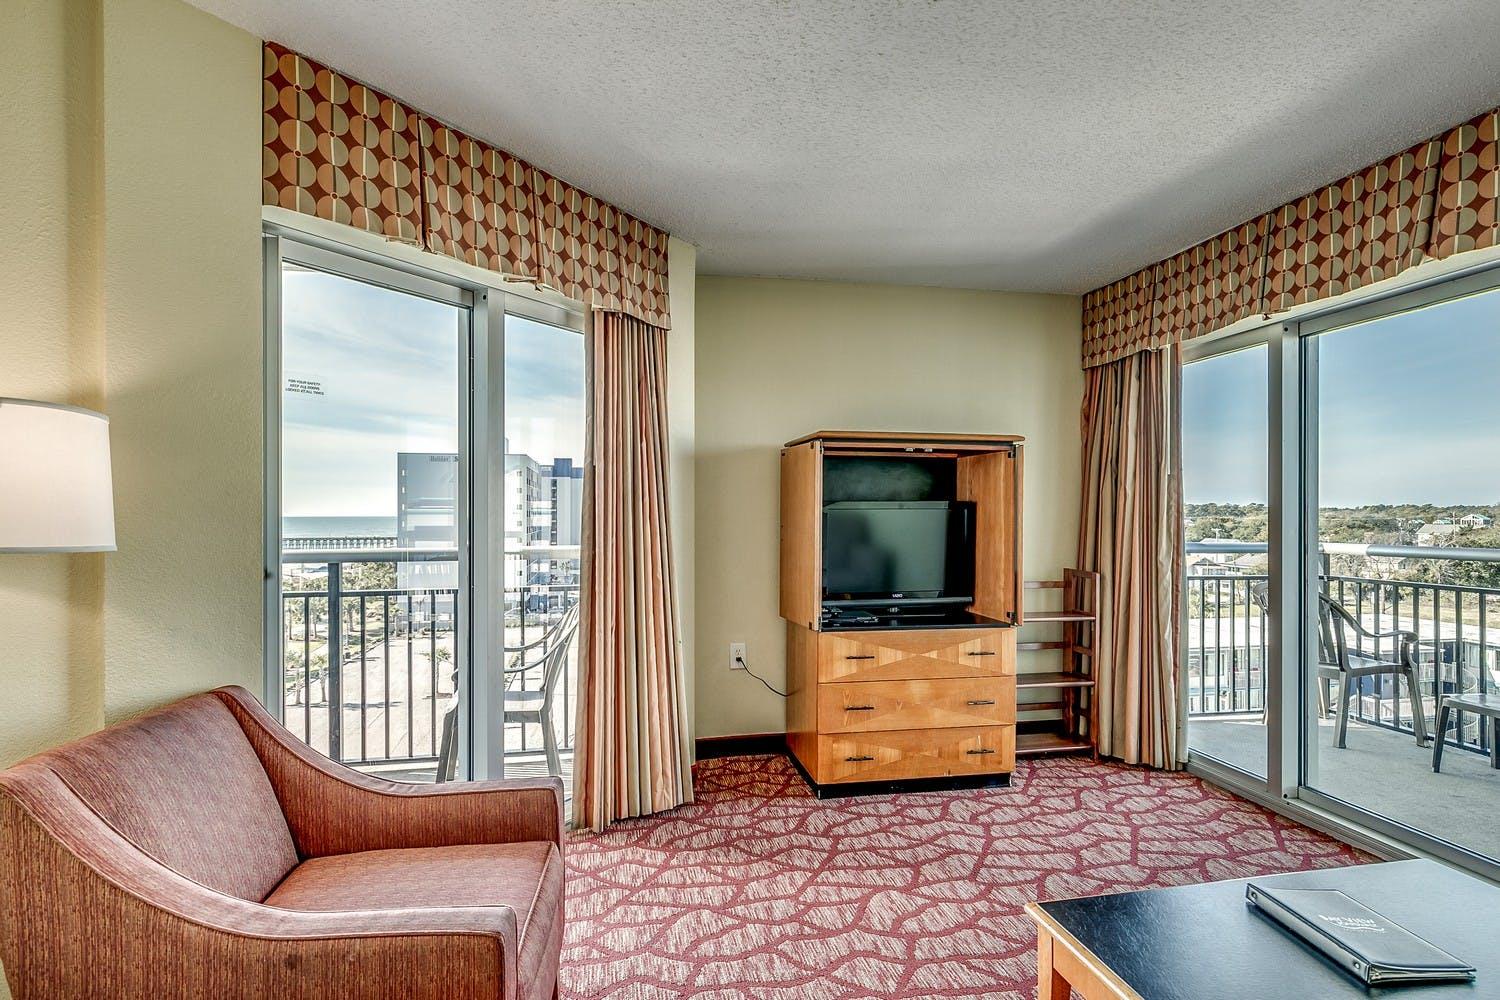 Bay View on the Boardwalk - 1 Bedroom Ocean View Condo